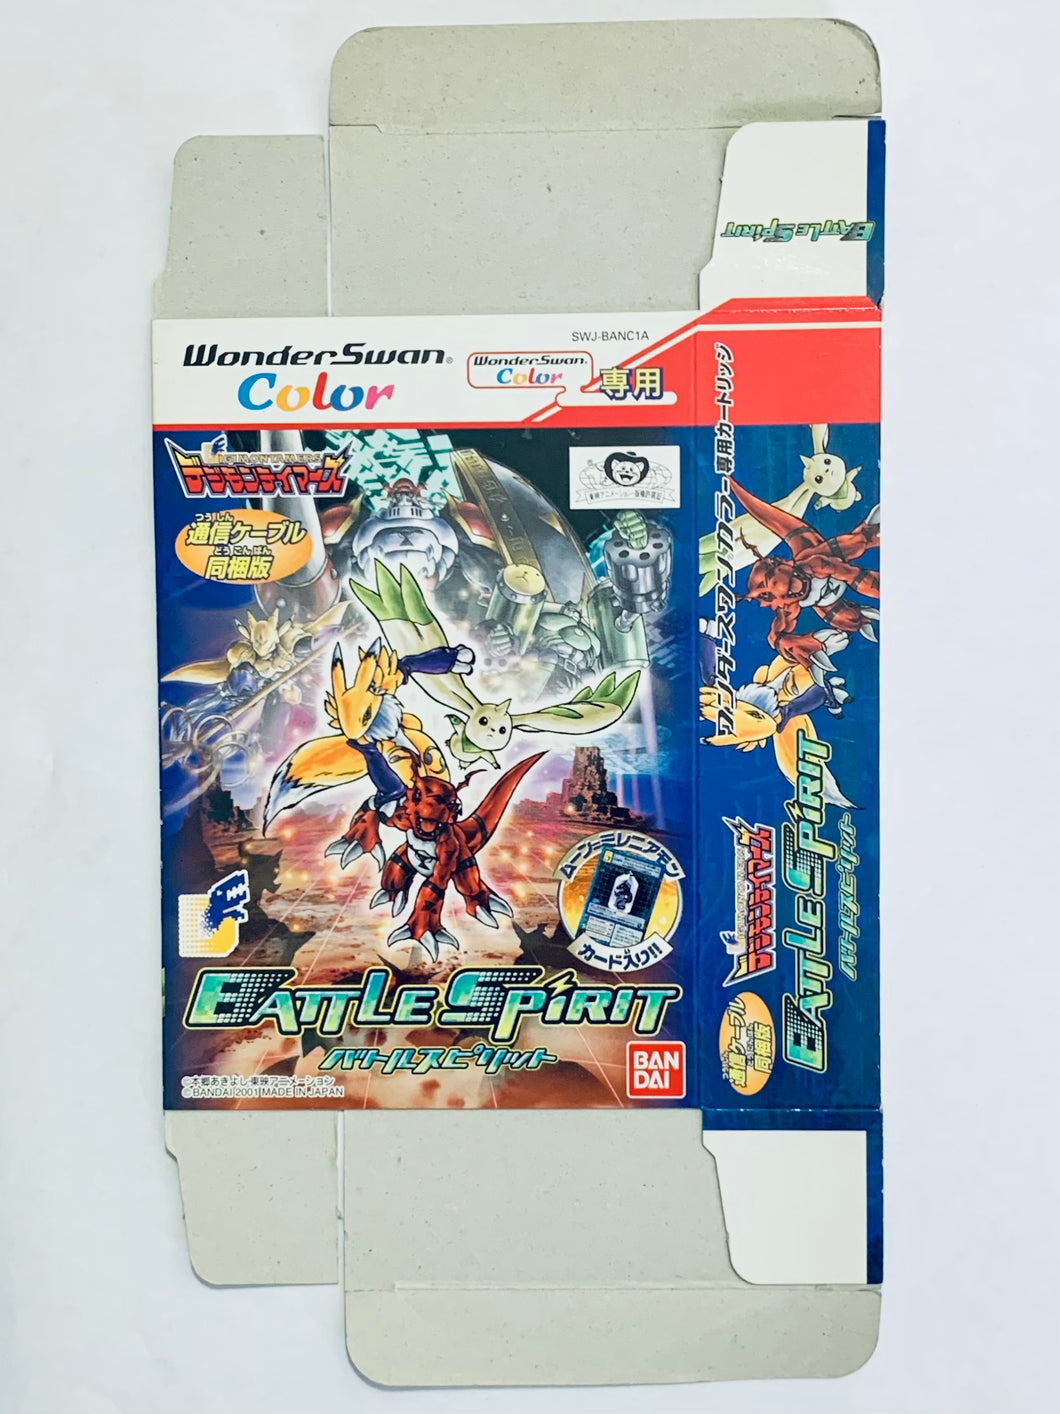 Battle Spirit: Digimon Tamers (w/Link Cable) - WonderSwan Color - WSC - JP - Box Only (SWJ-BANC1A)